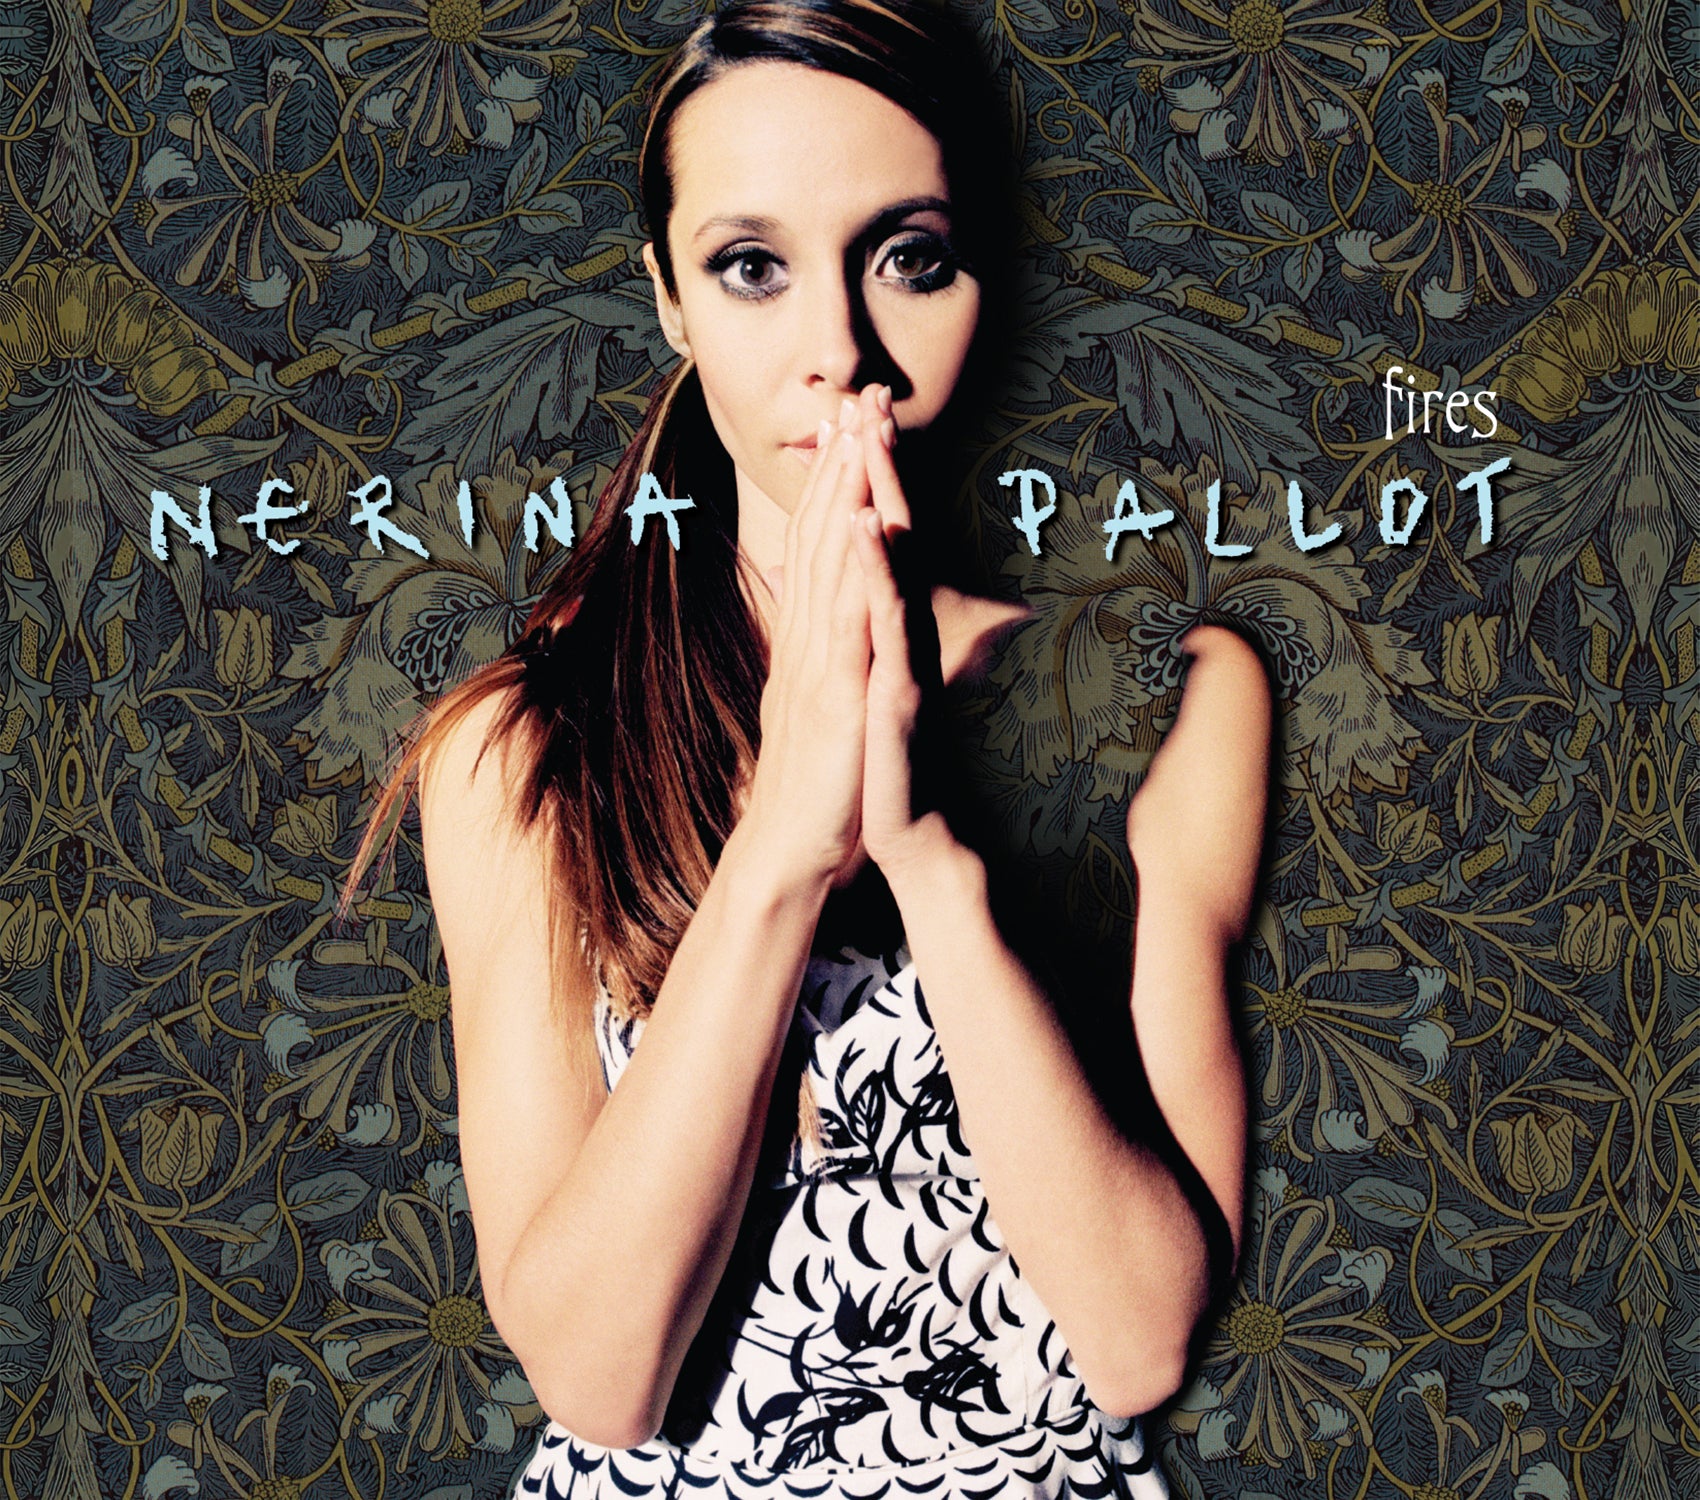 Nerina Pallot - Fires (2024 Half Speed Remaster): Vinyl LP